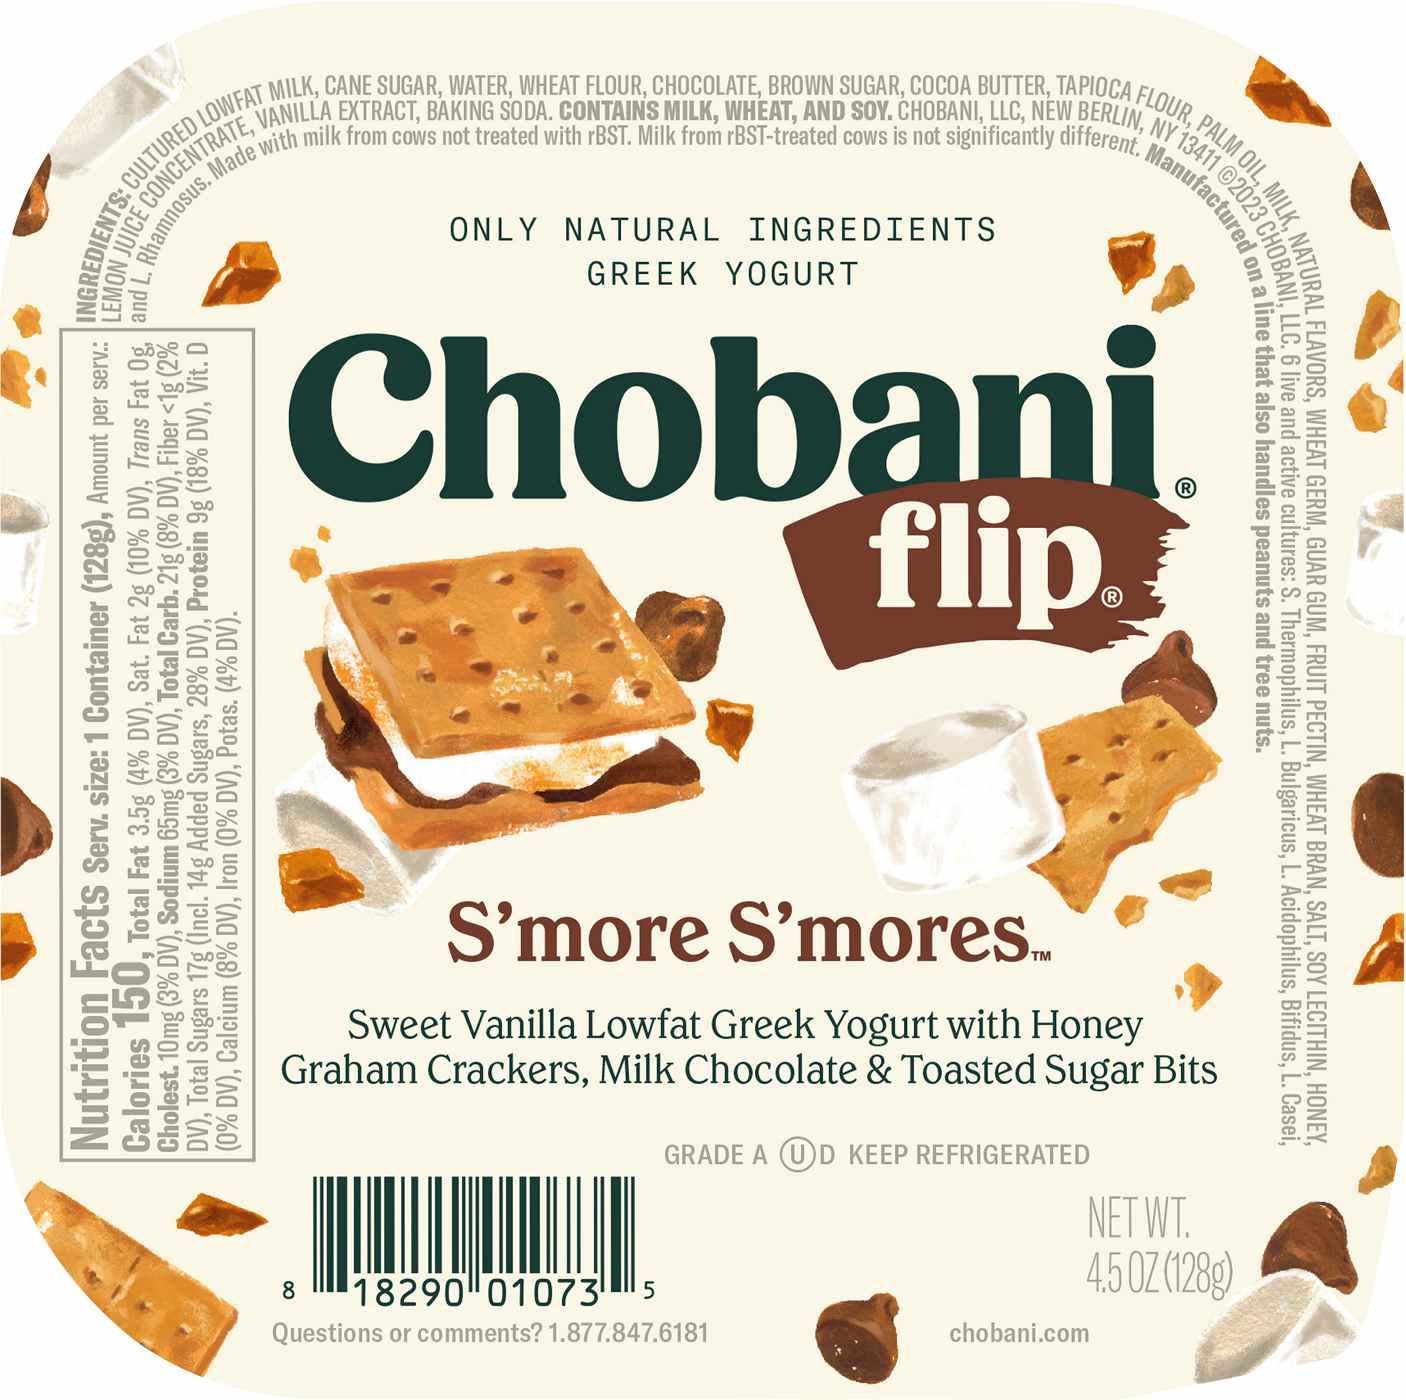 Chobani Flip Low-Fat S'more S'mores Greek Yogurt; image 2 of 2